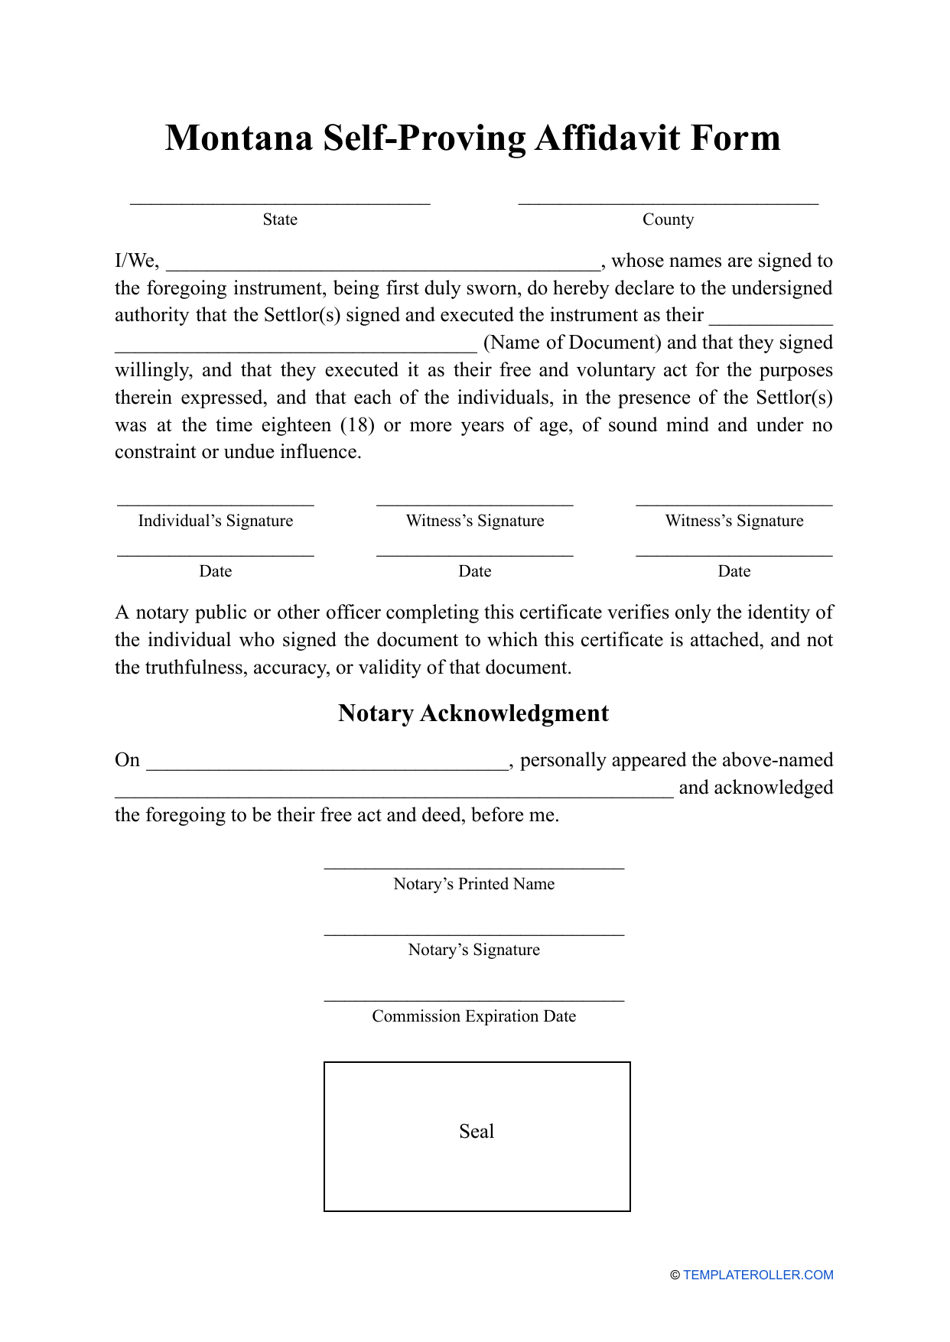 Self-proving Affidavit Form - Montana, Page 1